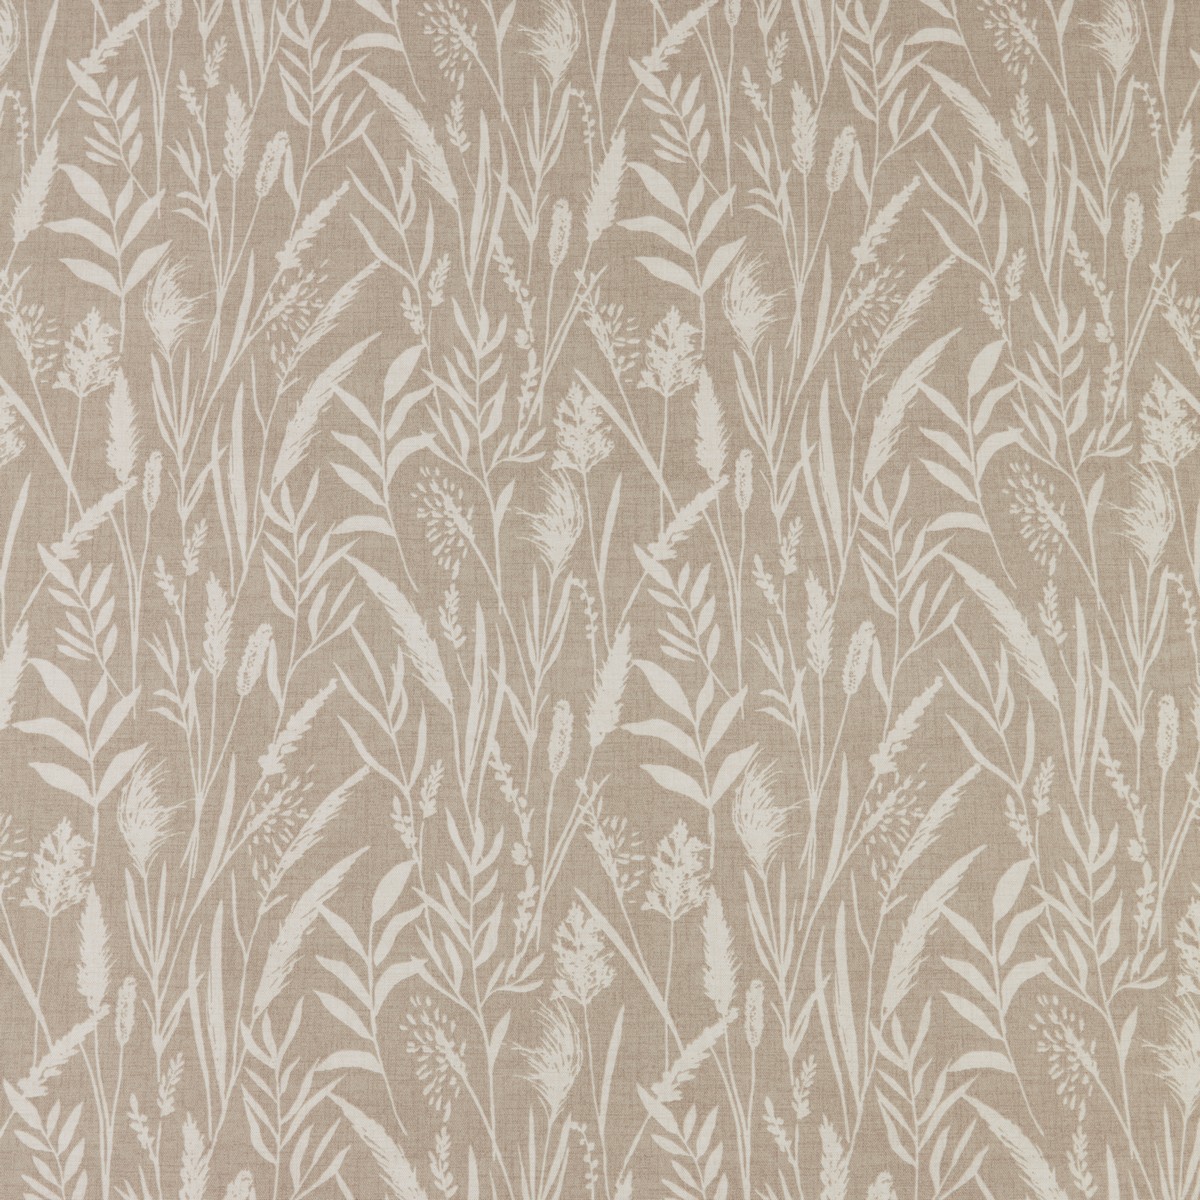 Wild Grasses Linen Fabric by iLiv